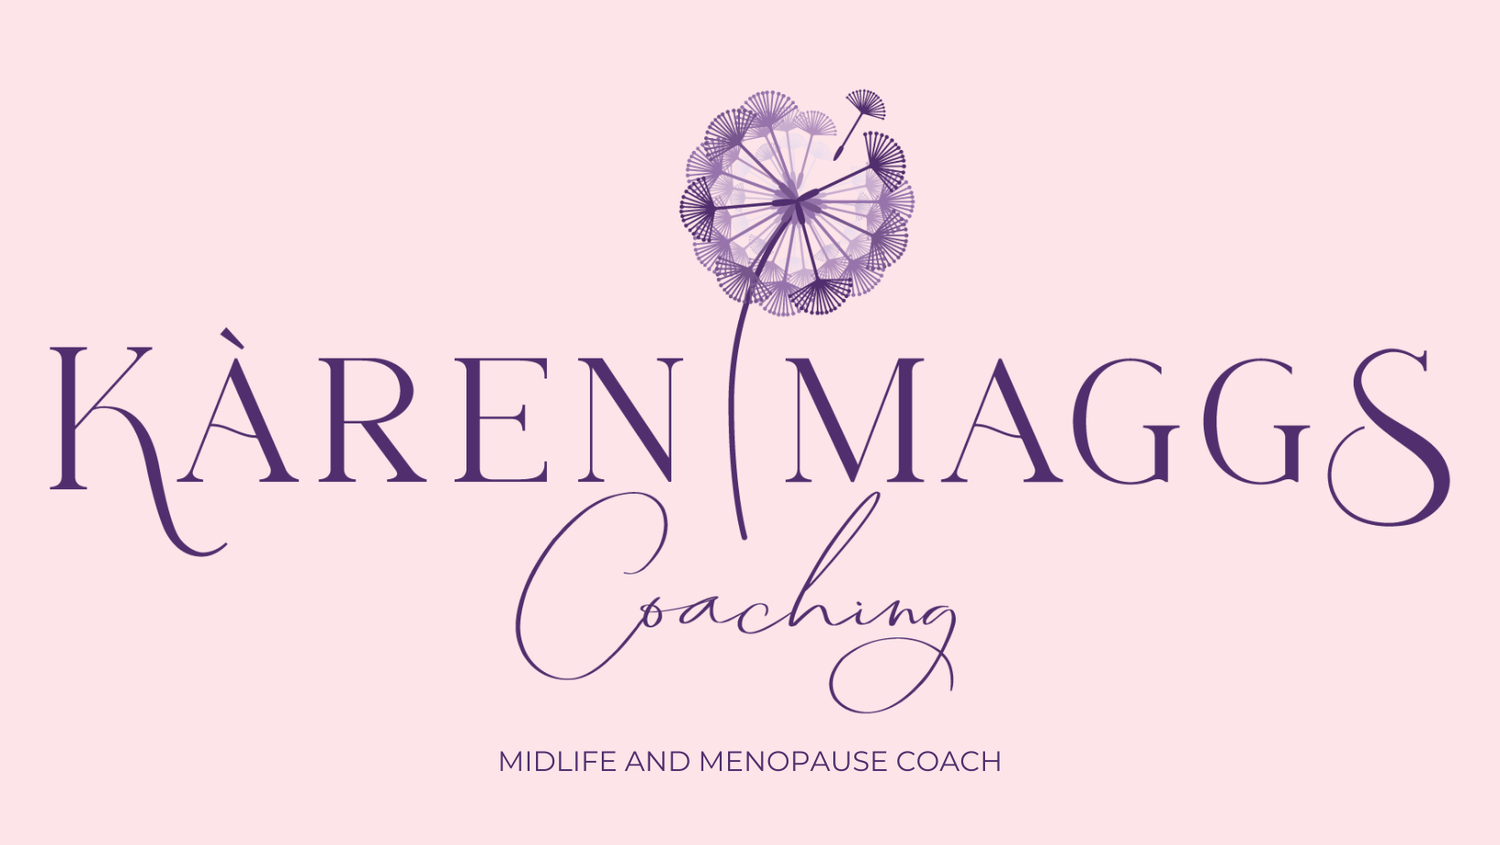   Karen Maggs Coaching